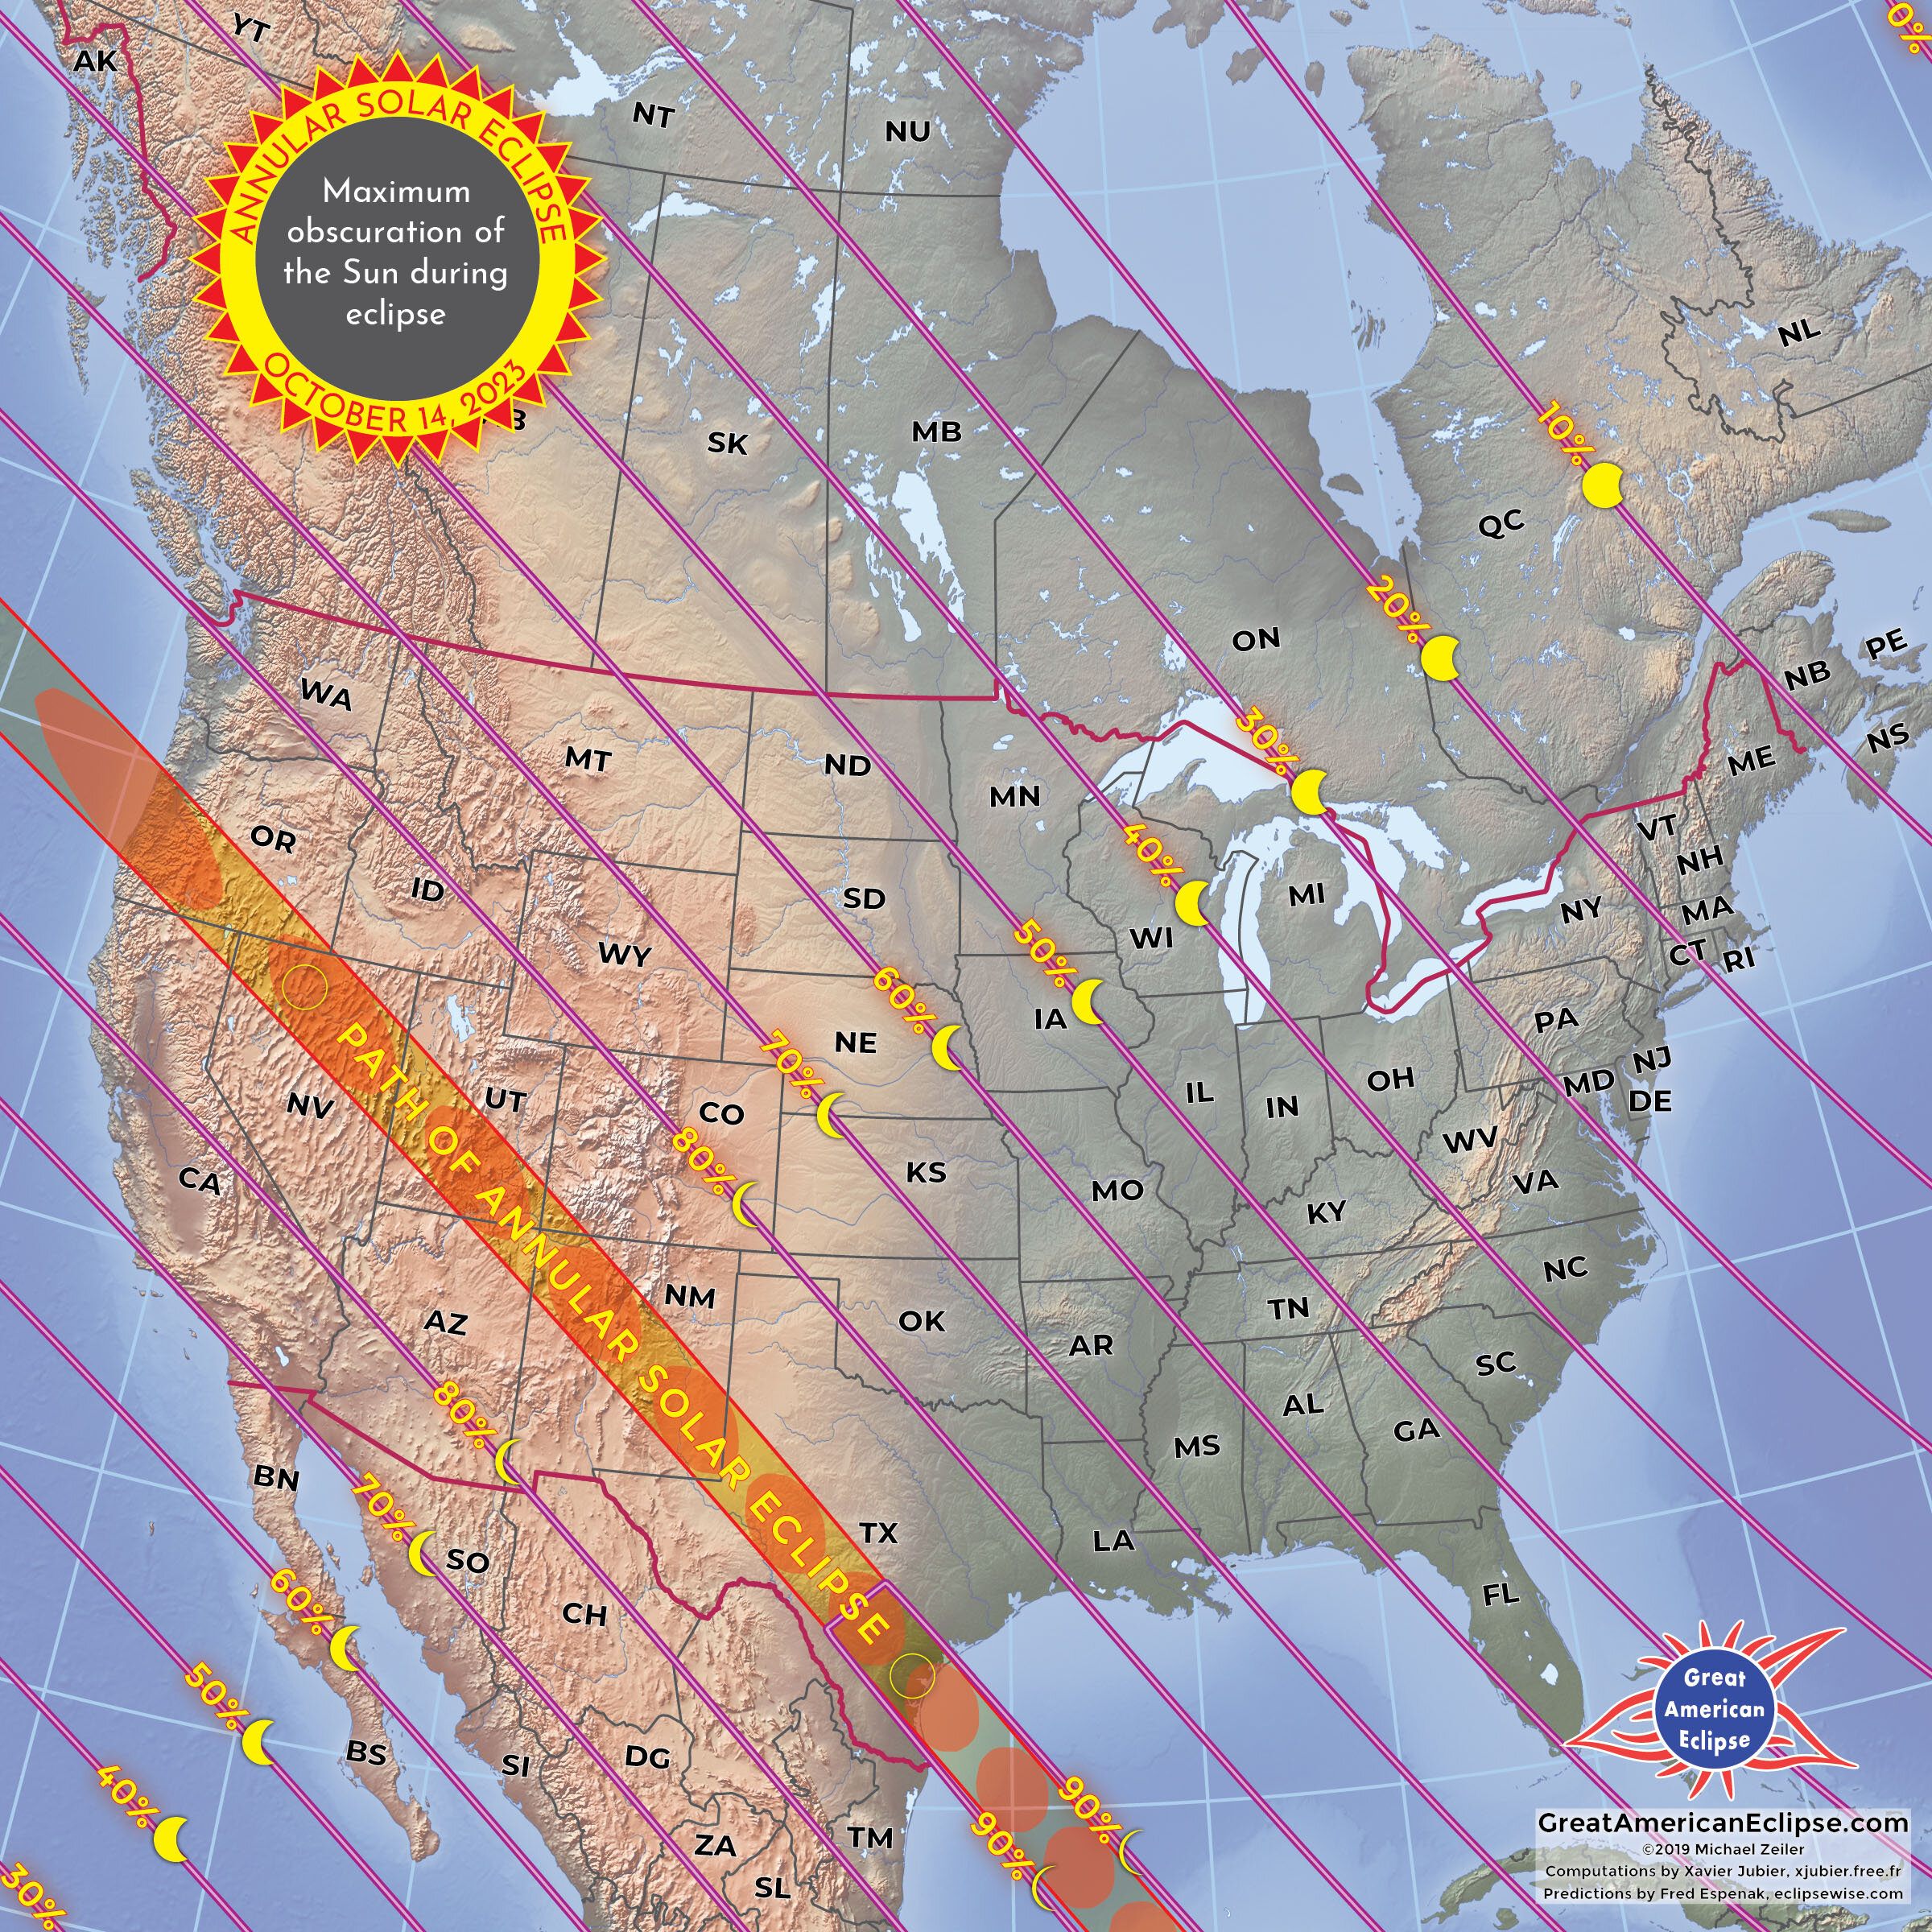 CREDIT: GreatAmericanEclipse.com - The annular solar eclipse across North America